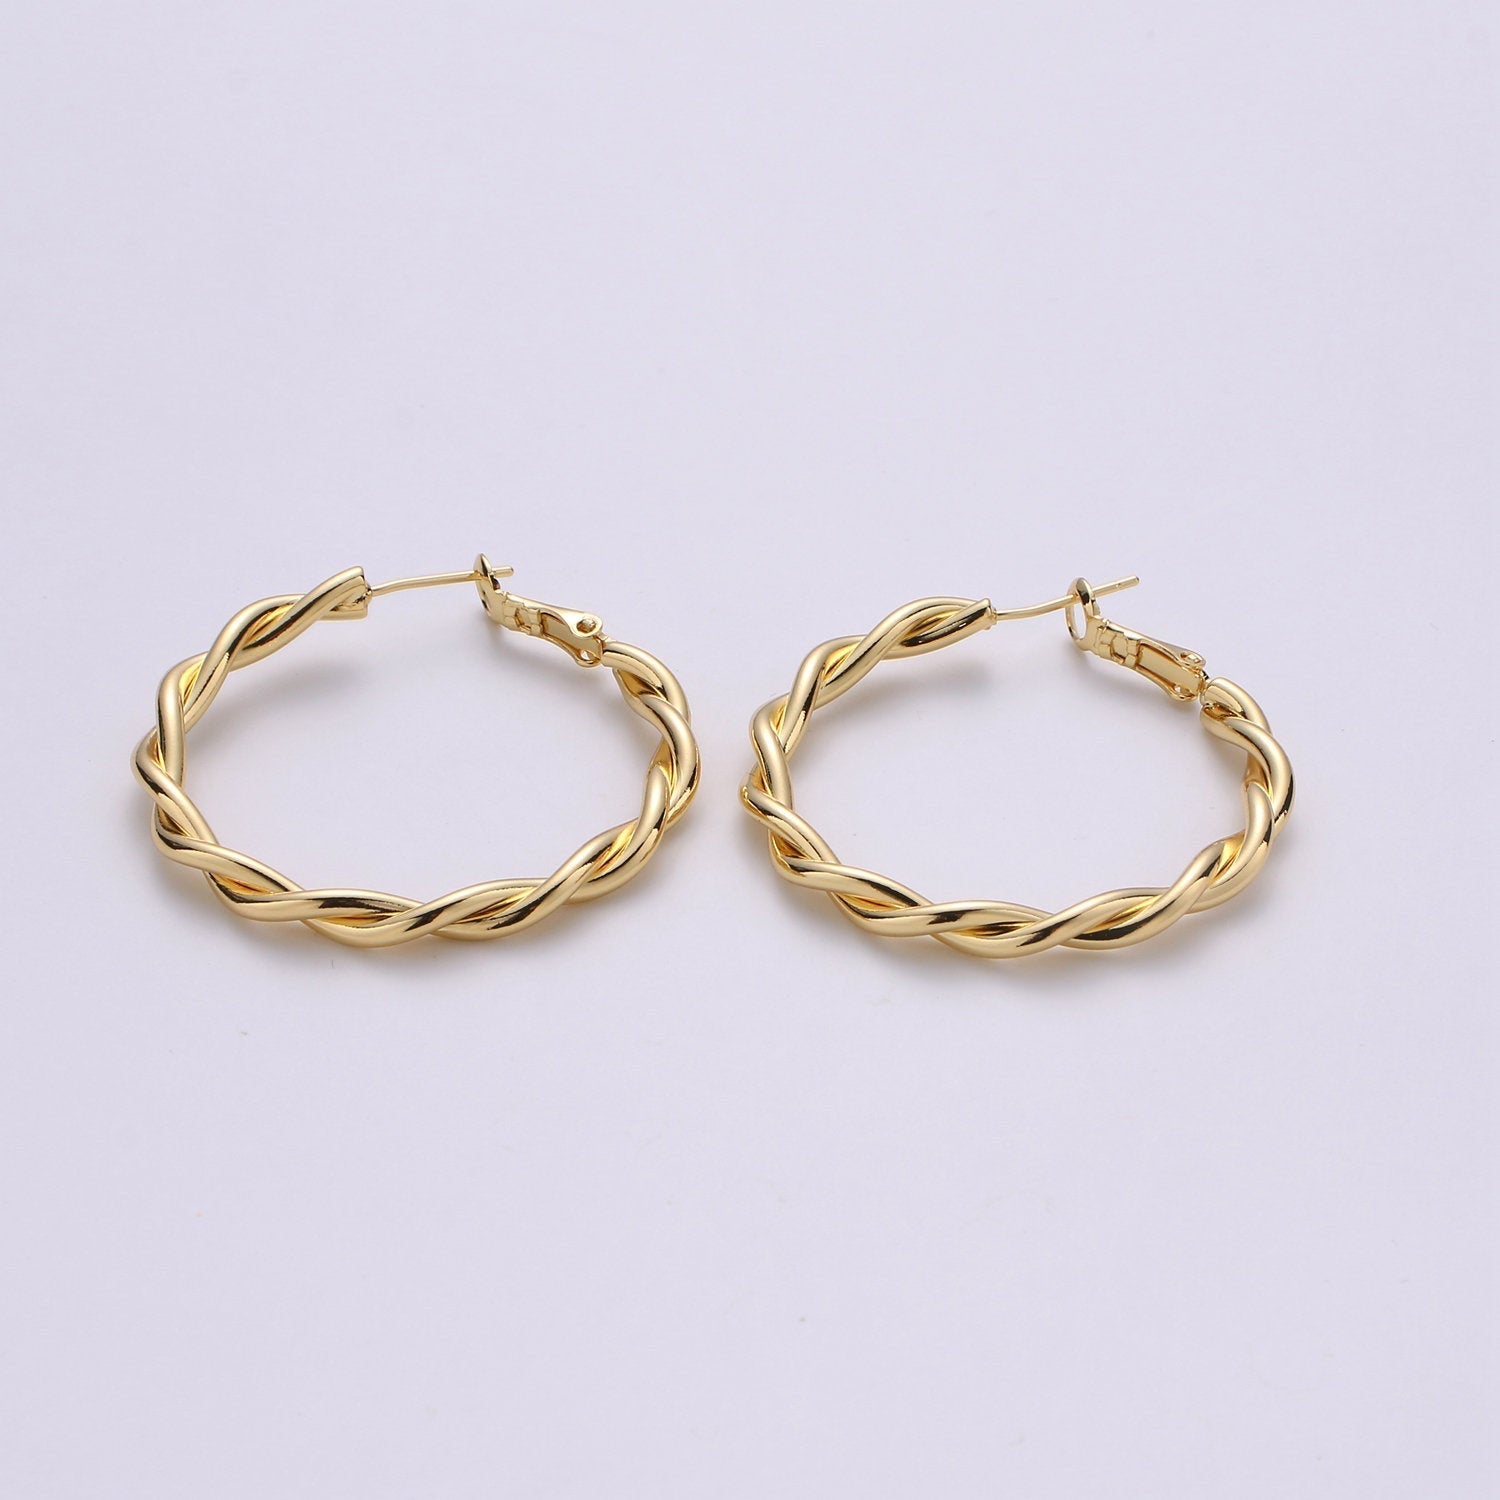 24k Vermeil Gold Earrings, Hoop Earrings, Medium Hoop, Twisted Rope Texture Earring, Gift for Her, Earrings for Women, Everyday Wear Earring - DLUXCA